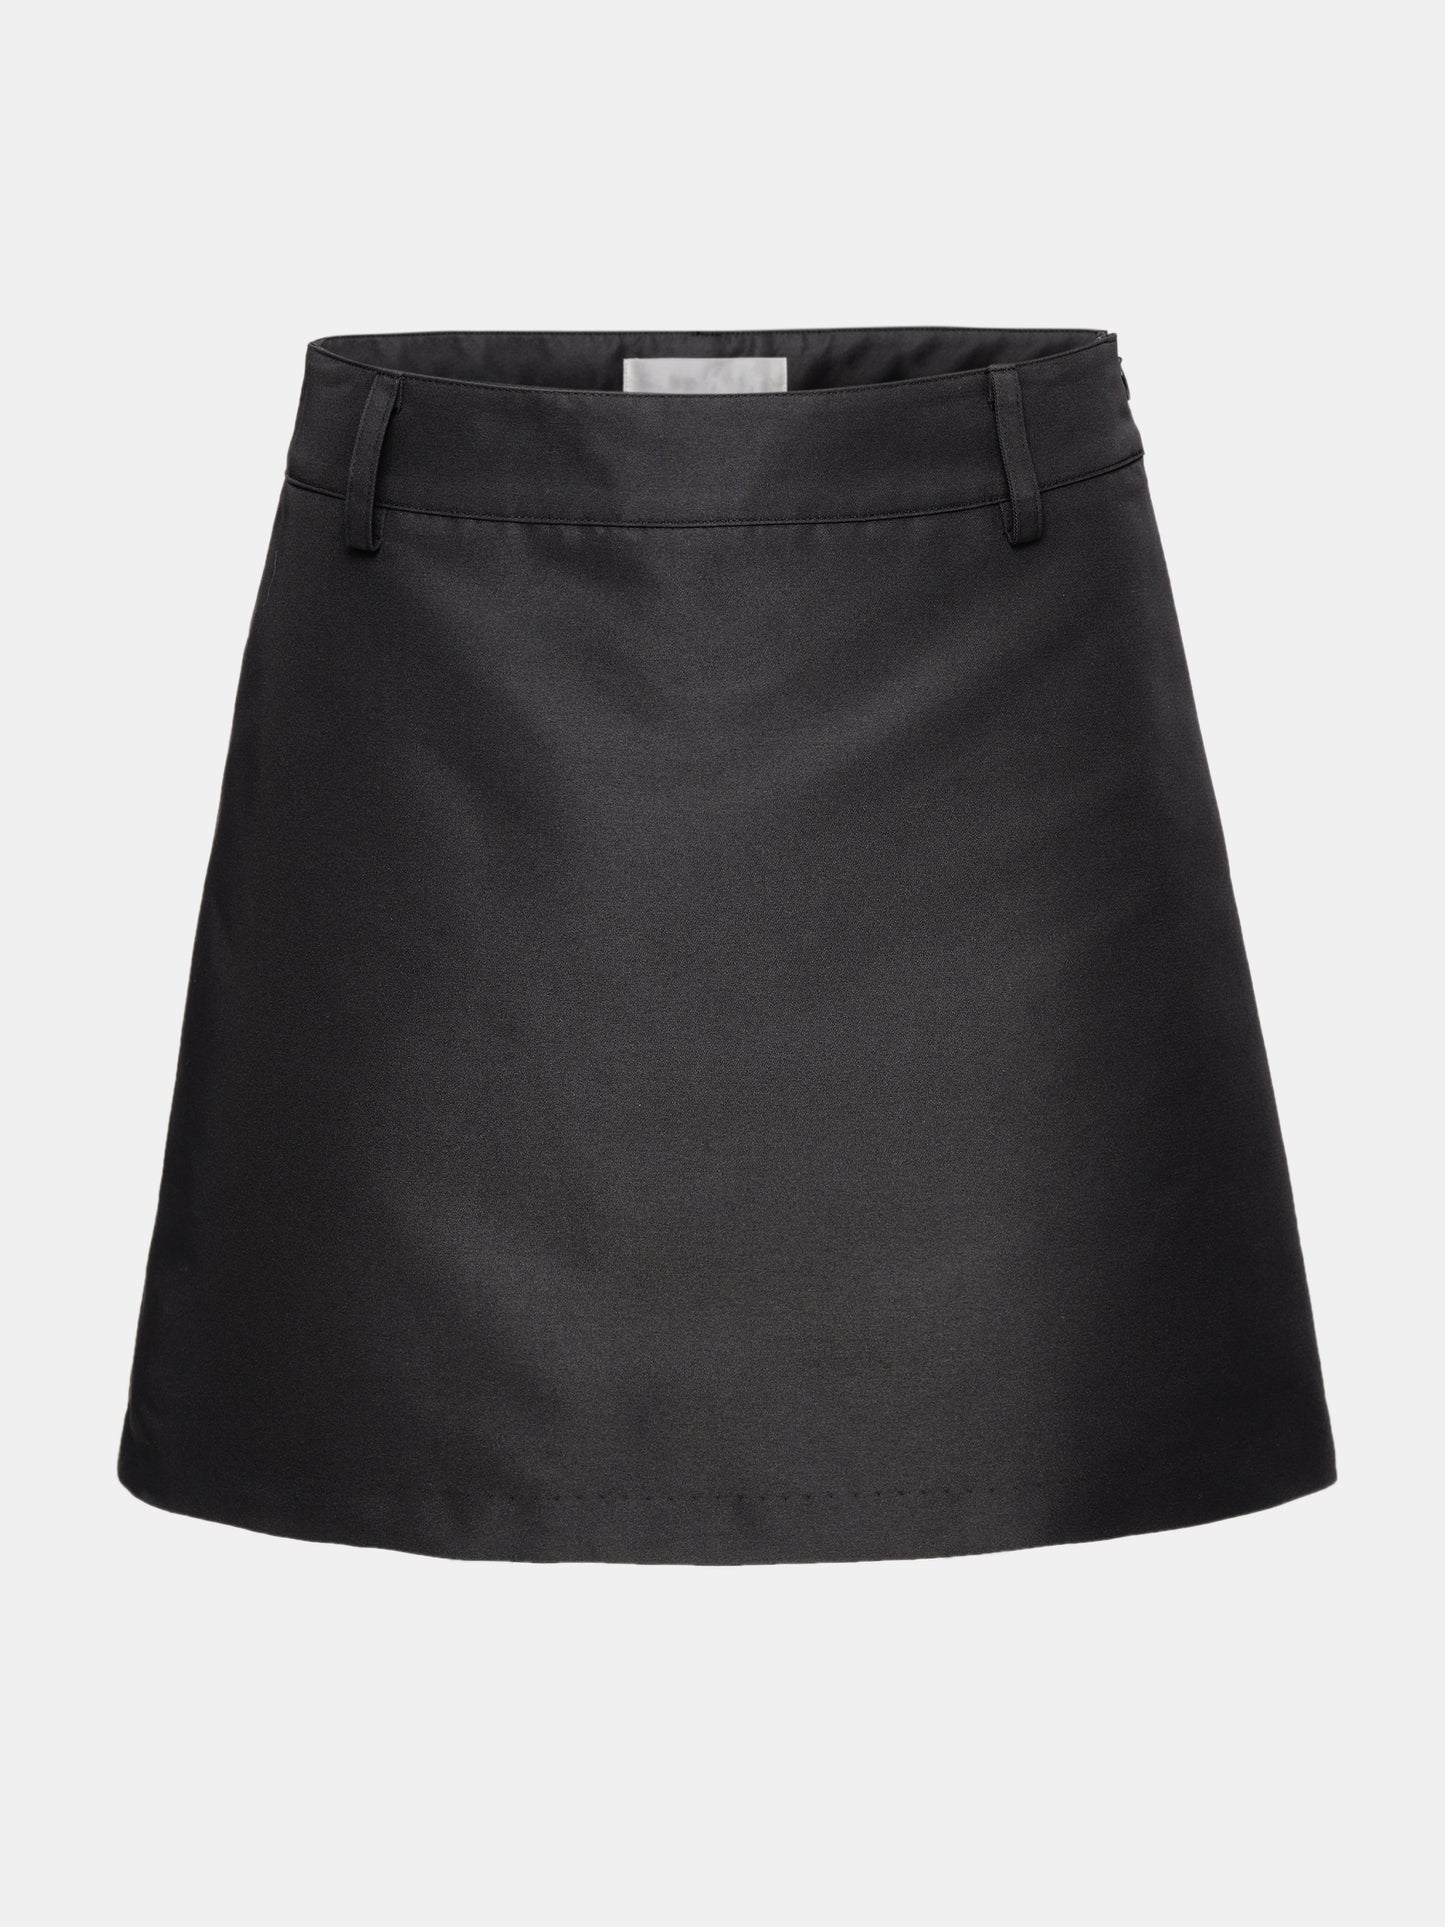 Nylon Suit Miniskirt, Black